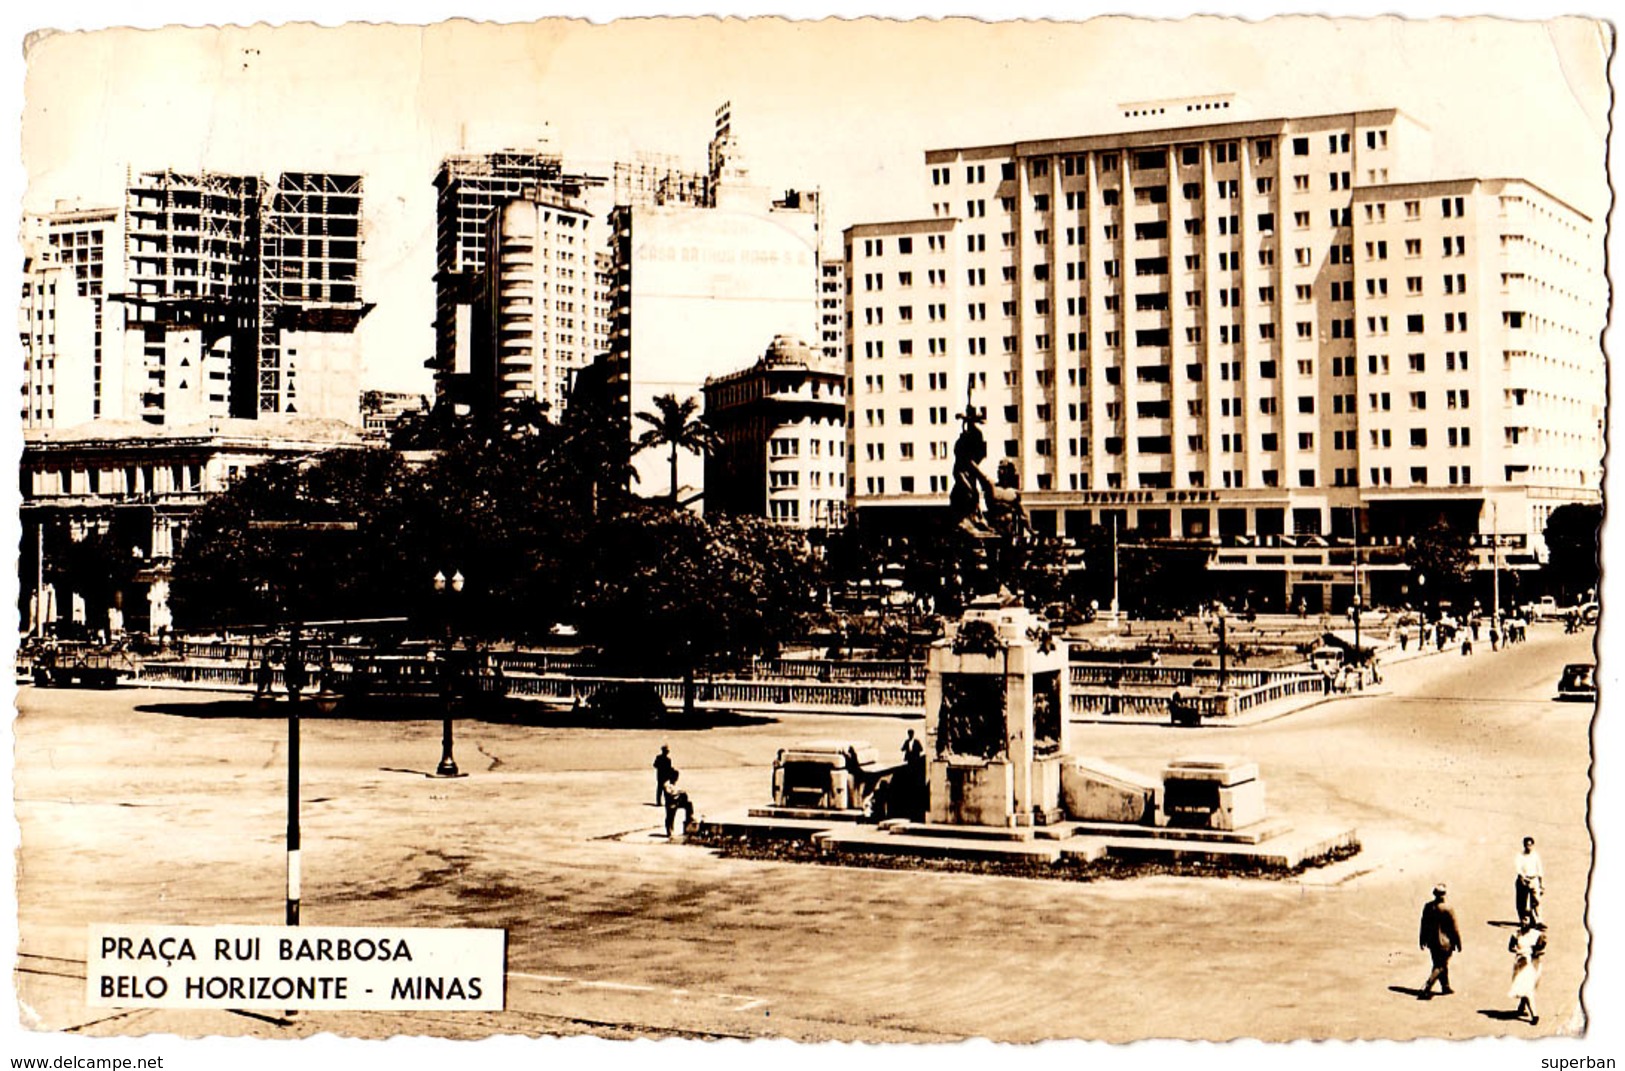 BELO HORIZONTE - MINAS : PRAÇA RUI BARBOSA - CARTE VRAIE PHOTO / REAL PHOTO POSTCARD - ANNÉE / YEAR ~ 1960 (aa572) - Belo Horizonte